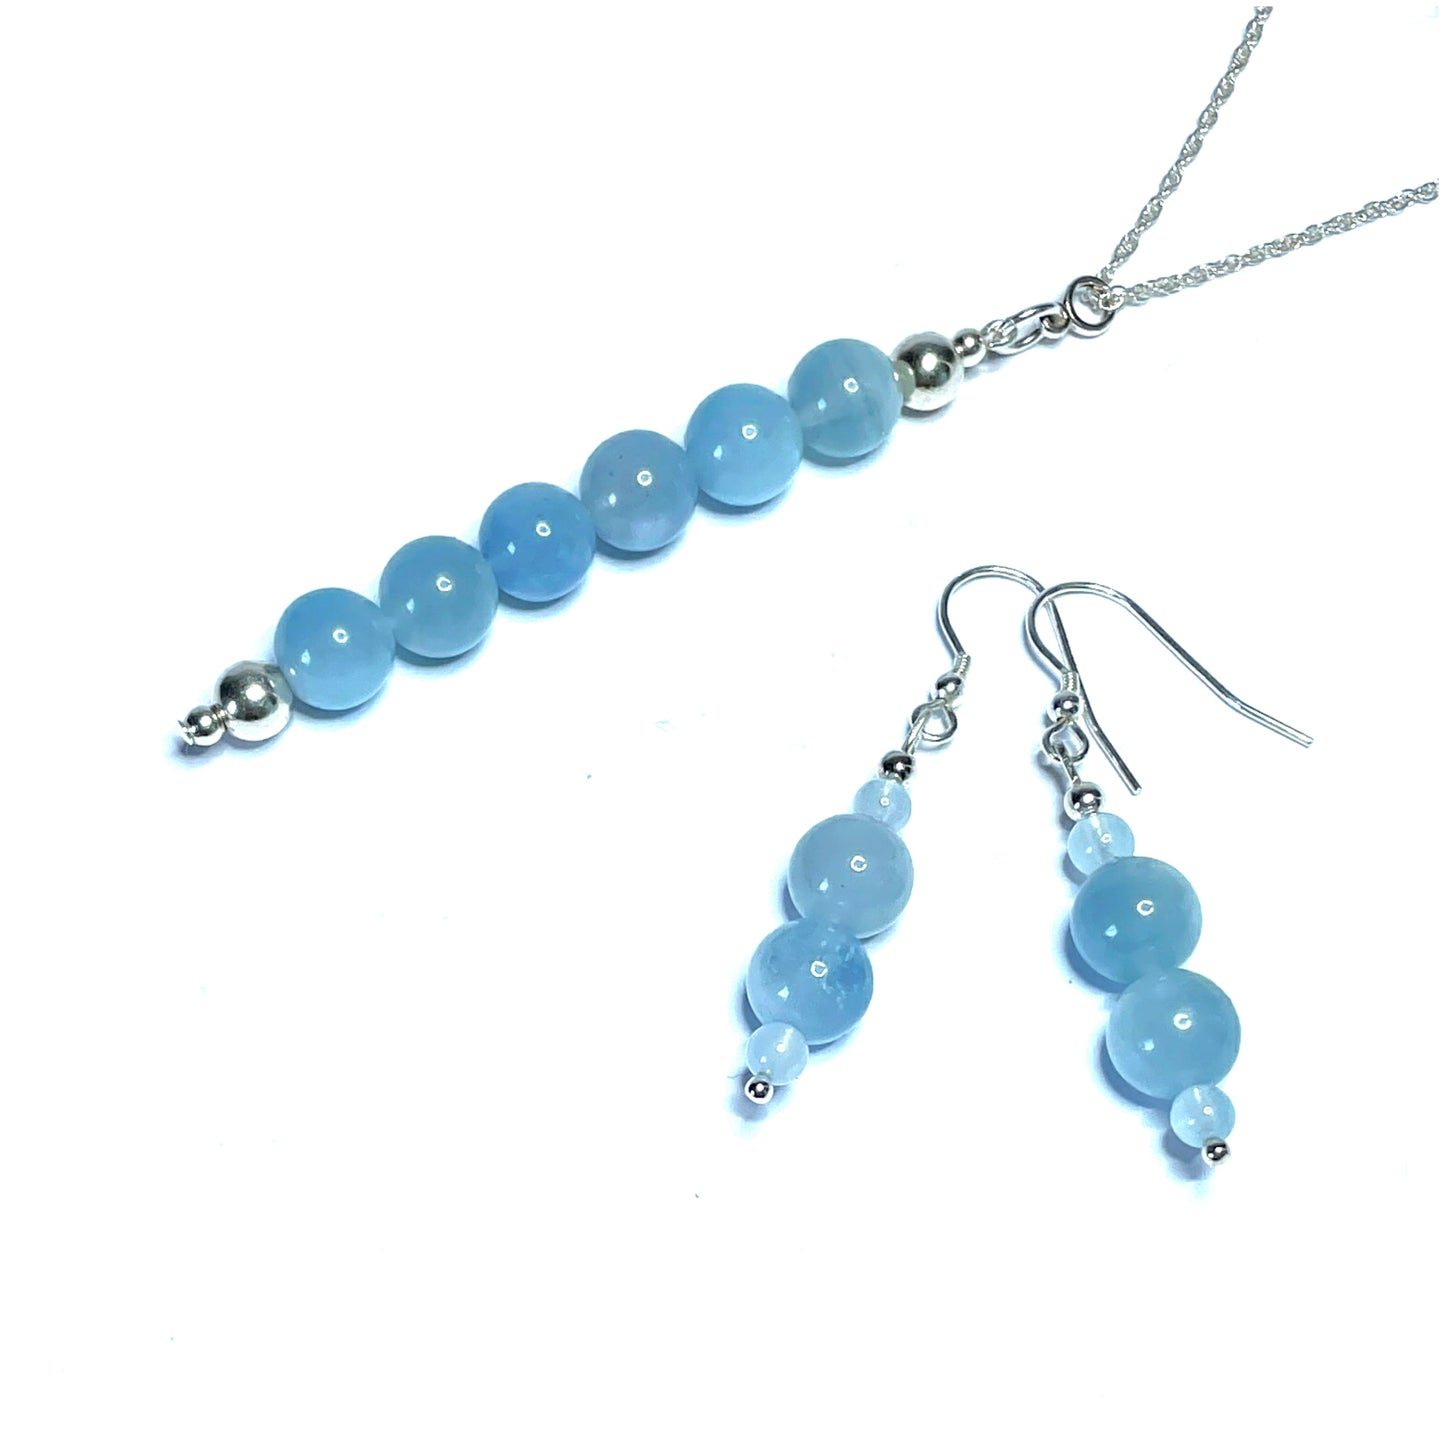 Aquamarine crystal pendant and earrings set